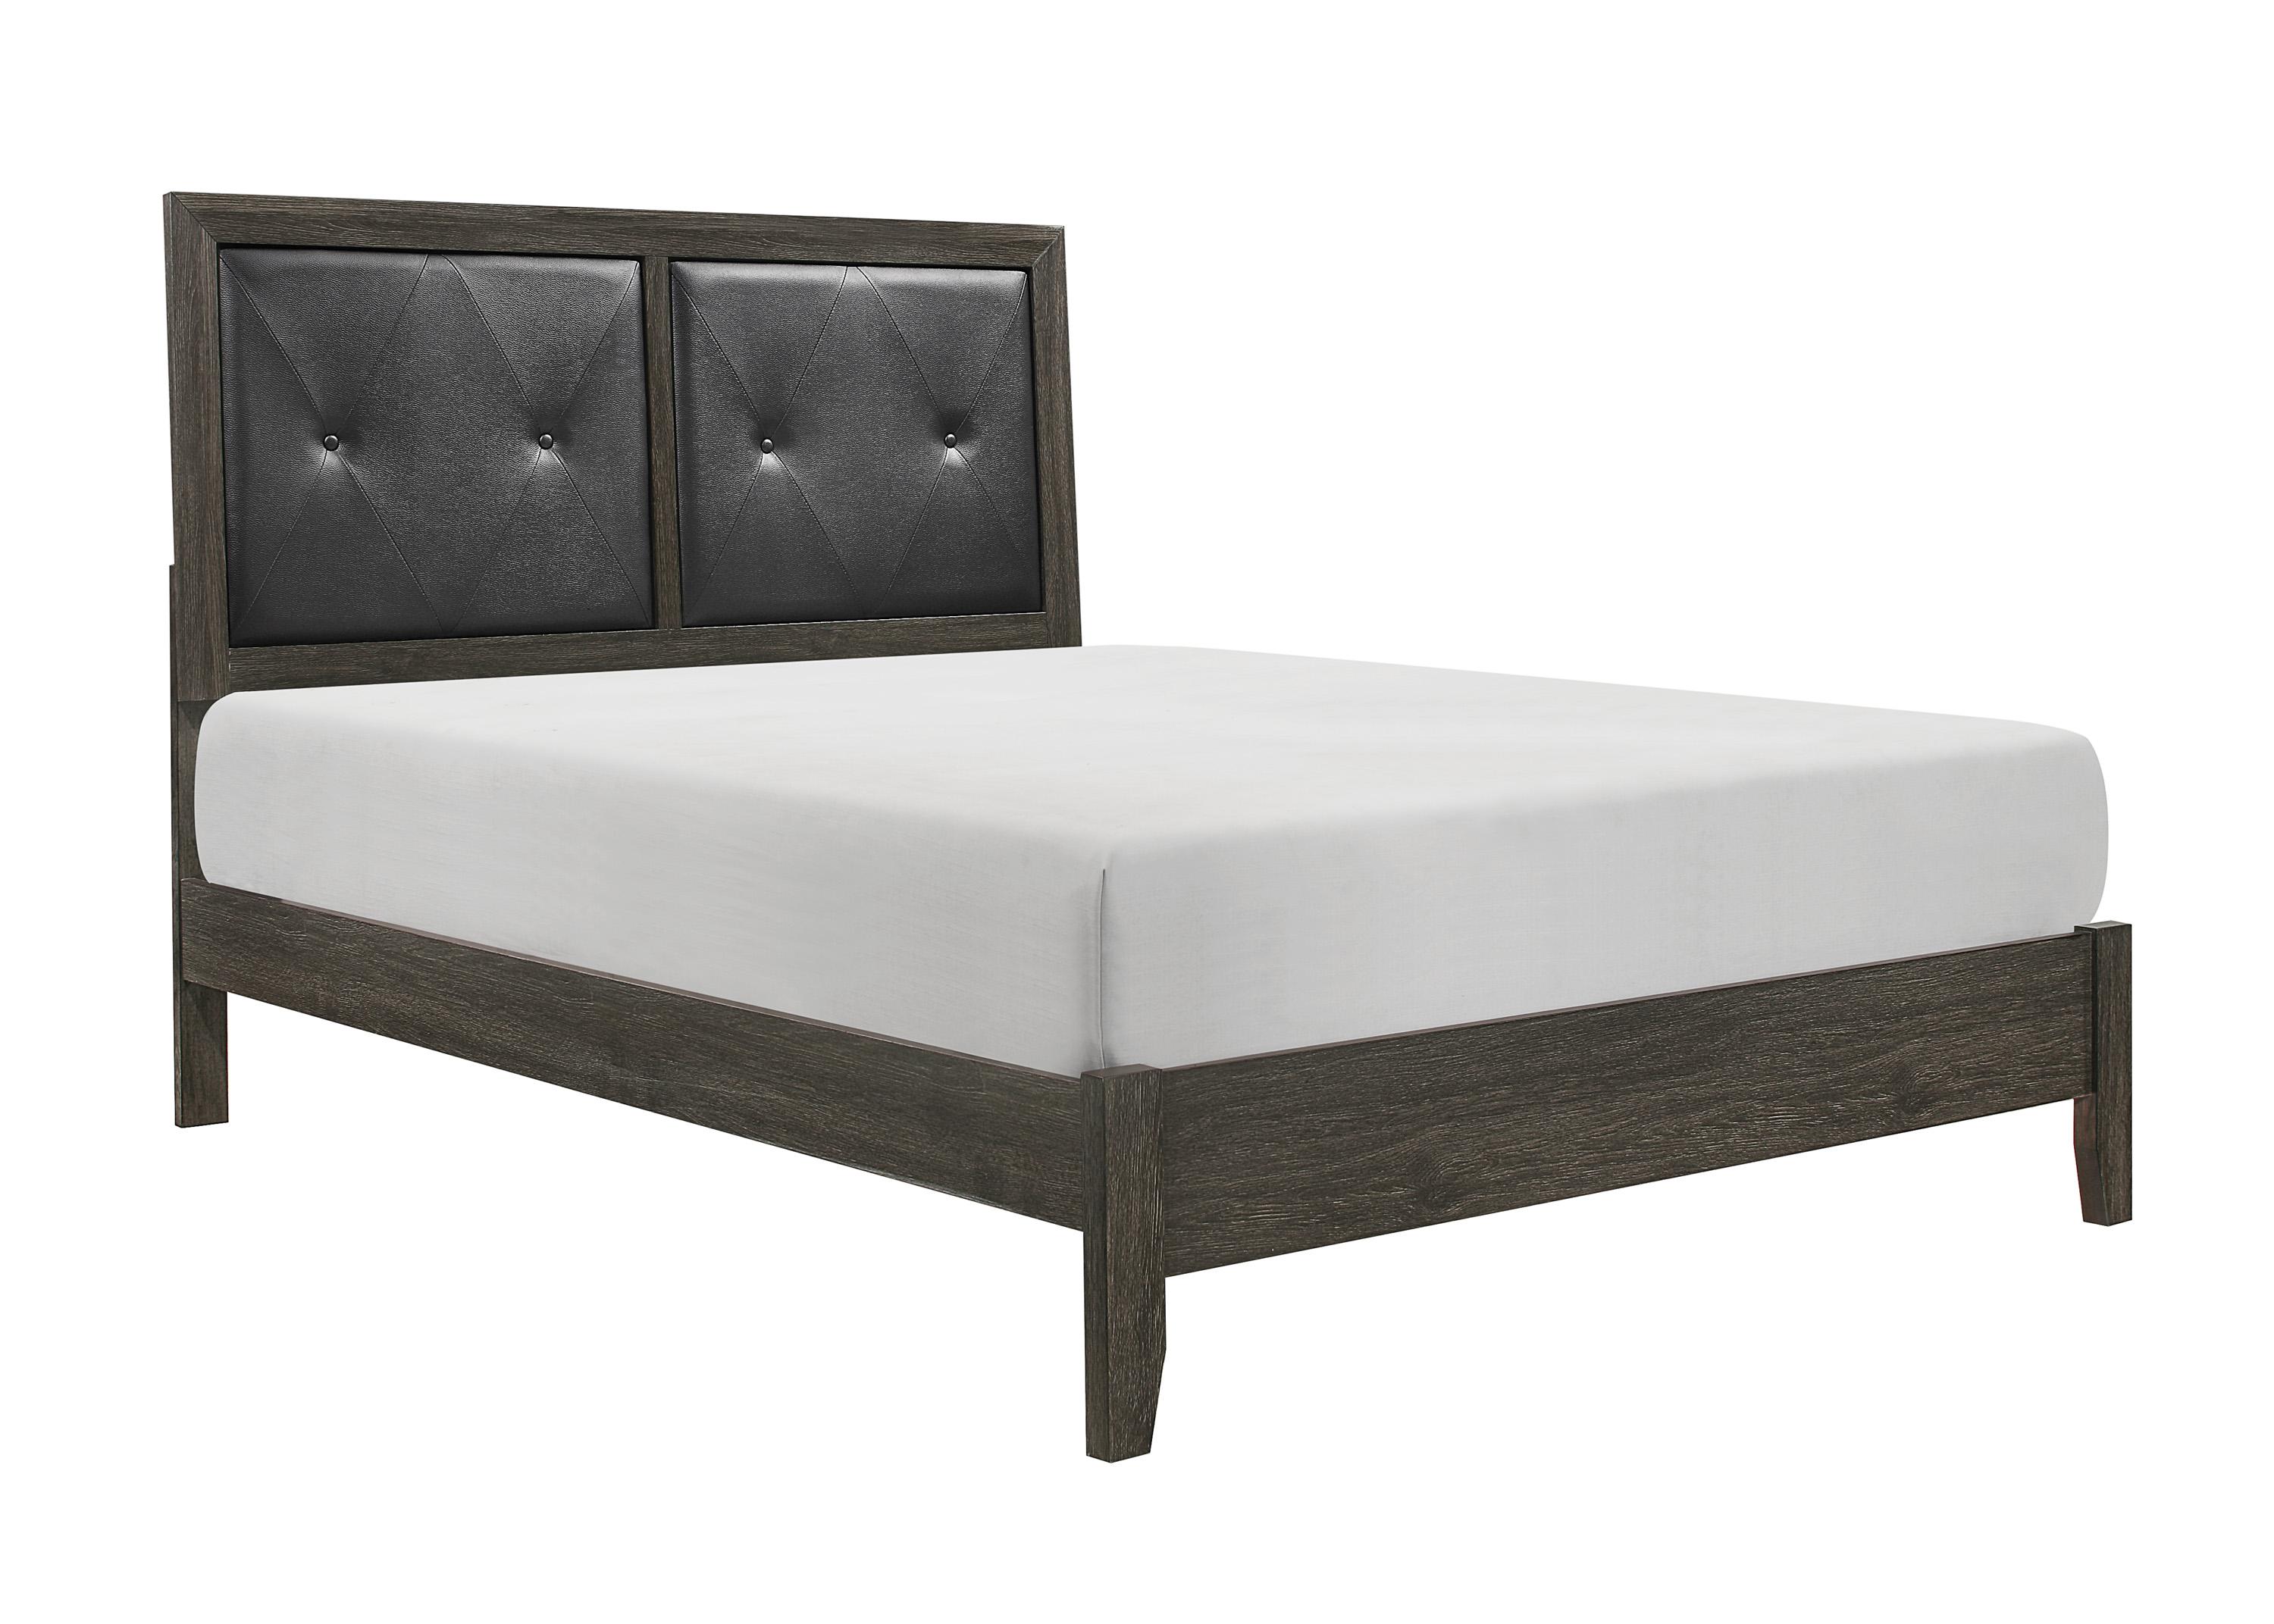 

    
Contemporary Dark Gray Wood Twin Bedroom Set 6pcs Homelegance 2145TNP-1* Edina
